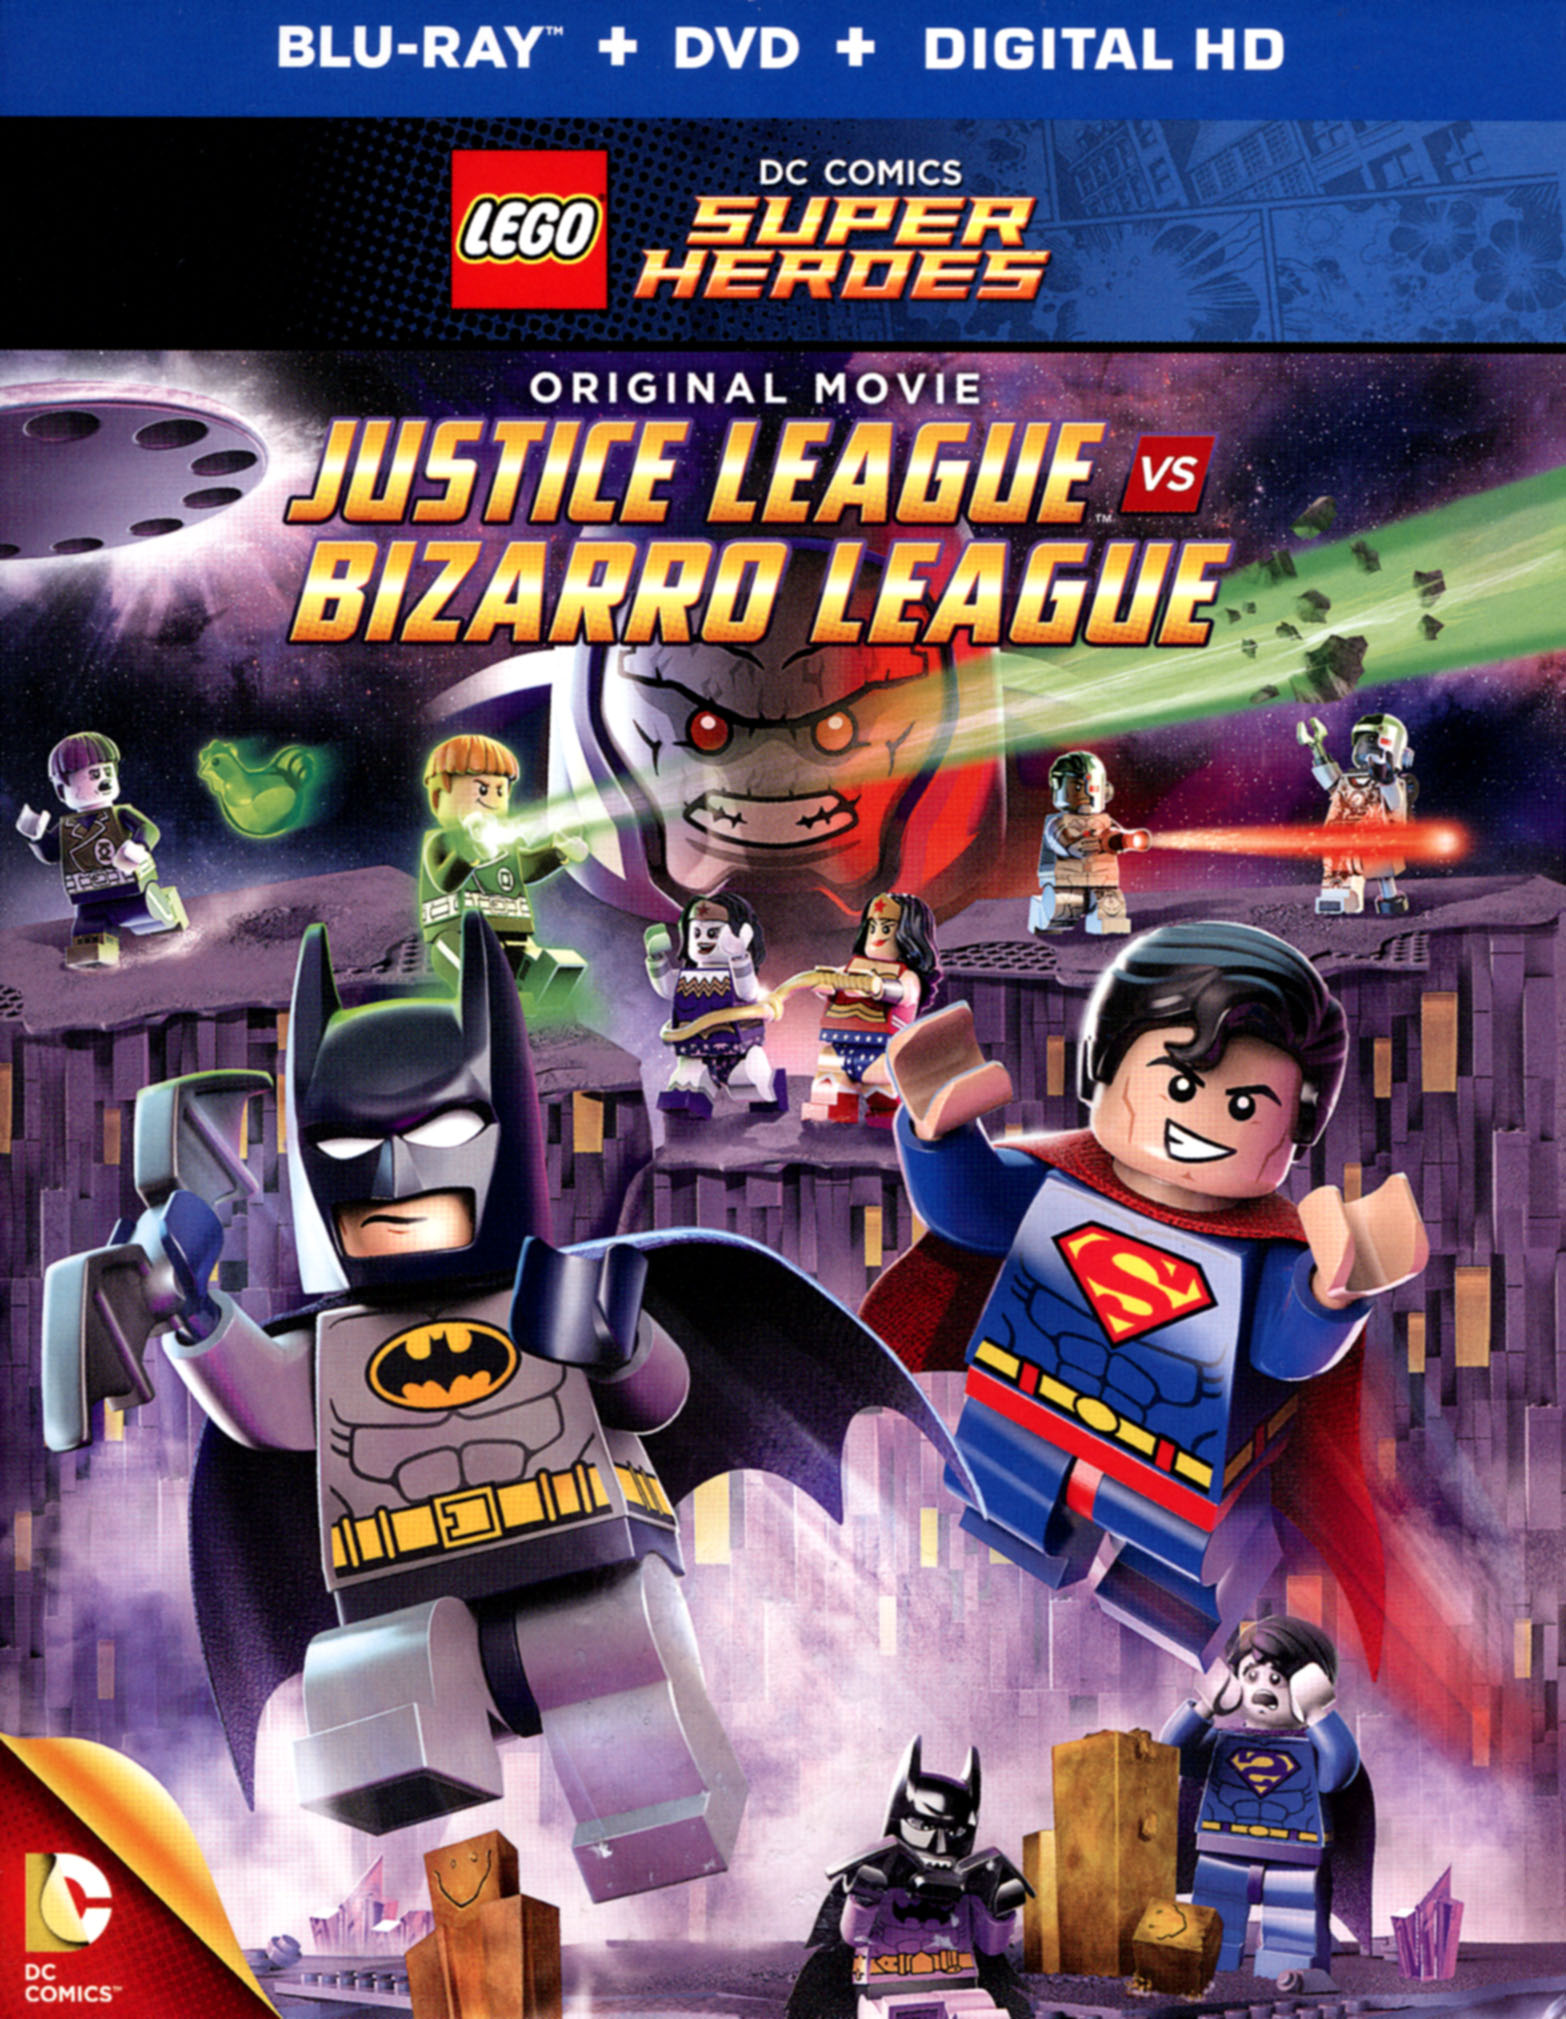 Kid Blu-ray DVD Lot - The LEGO Movie 2 (New) LEGO DC Batman: Family Matters  (New